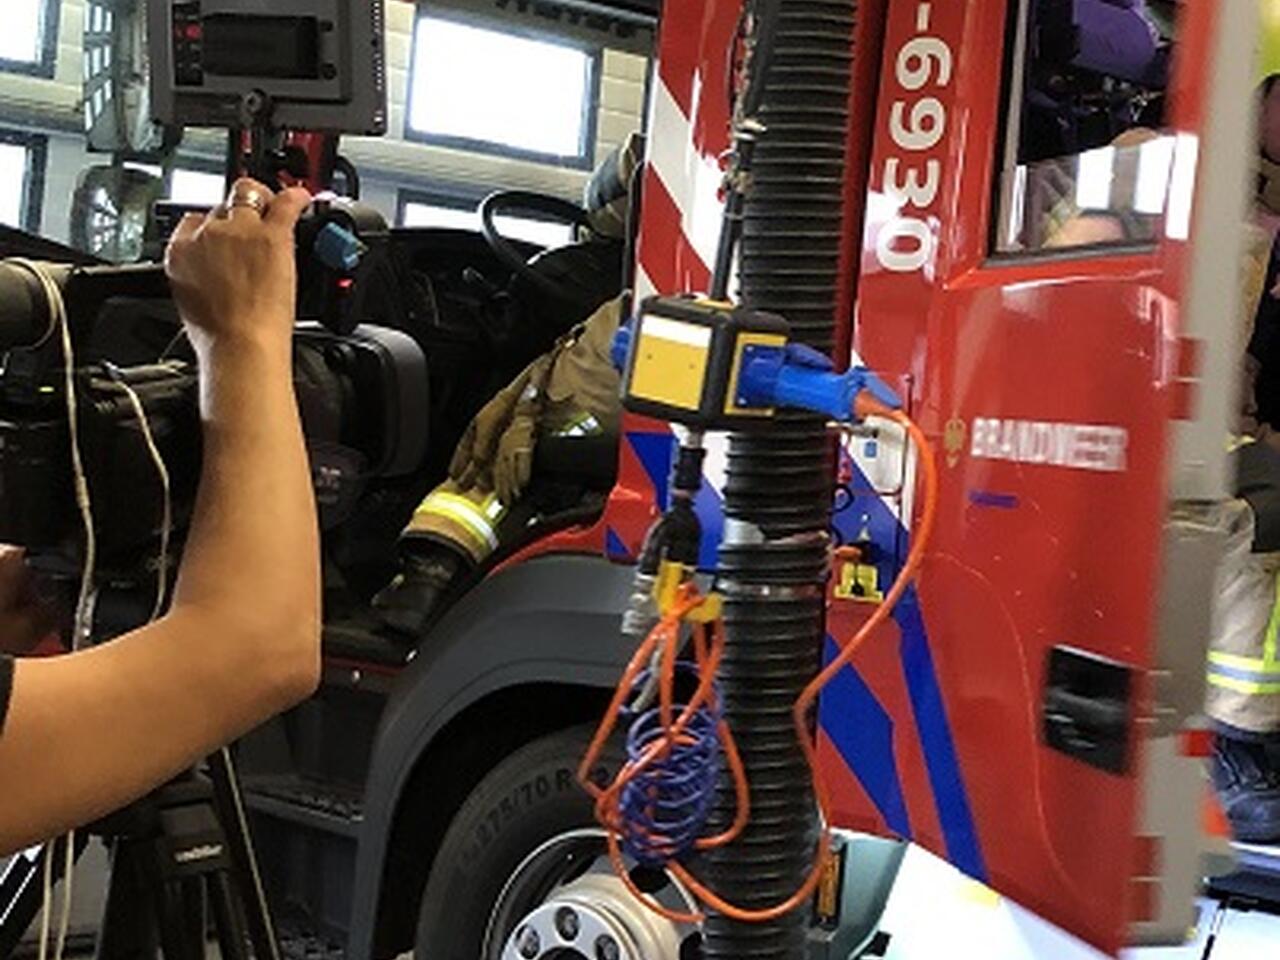 Camera die de brandweerauto filmt